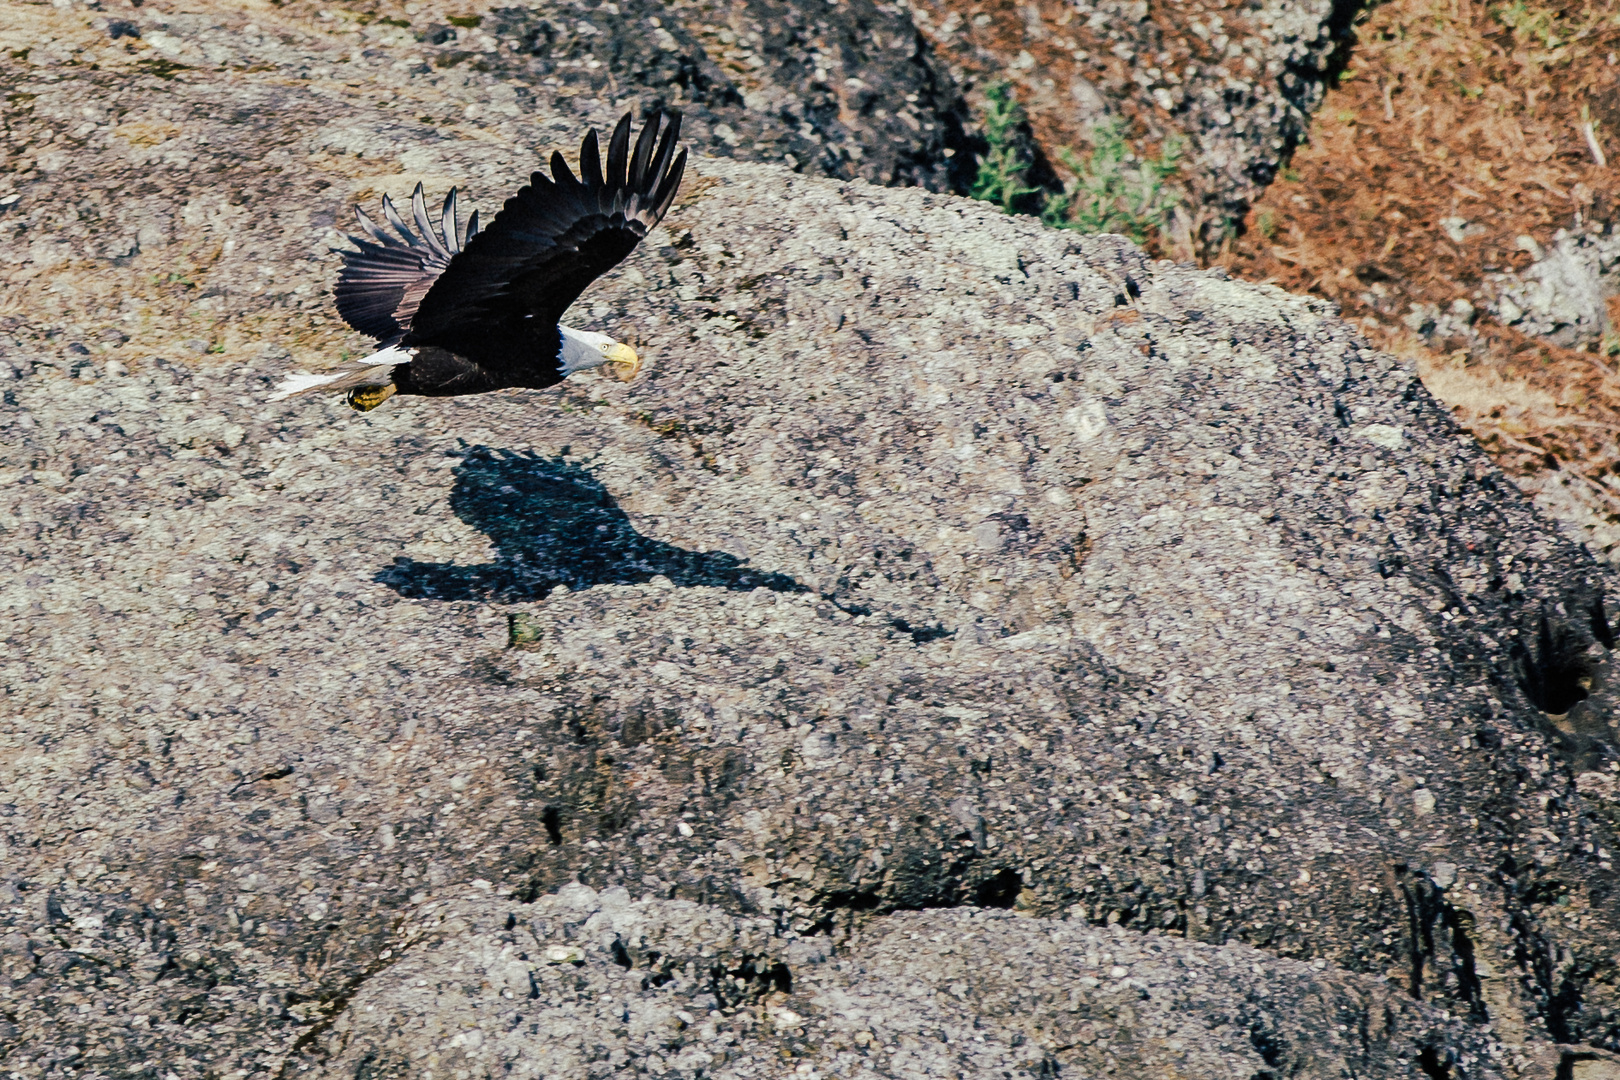 Bald eagle - hunting shadows